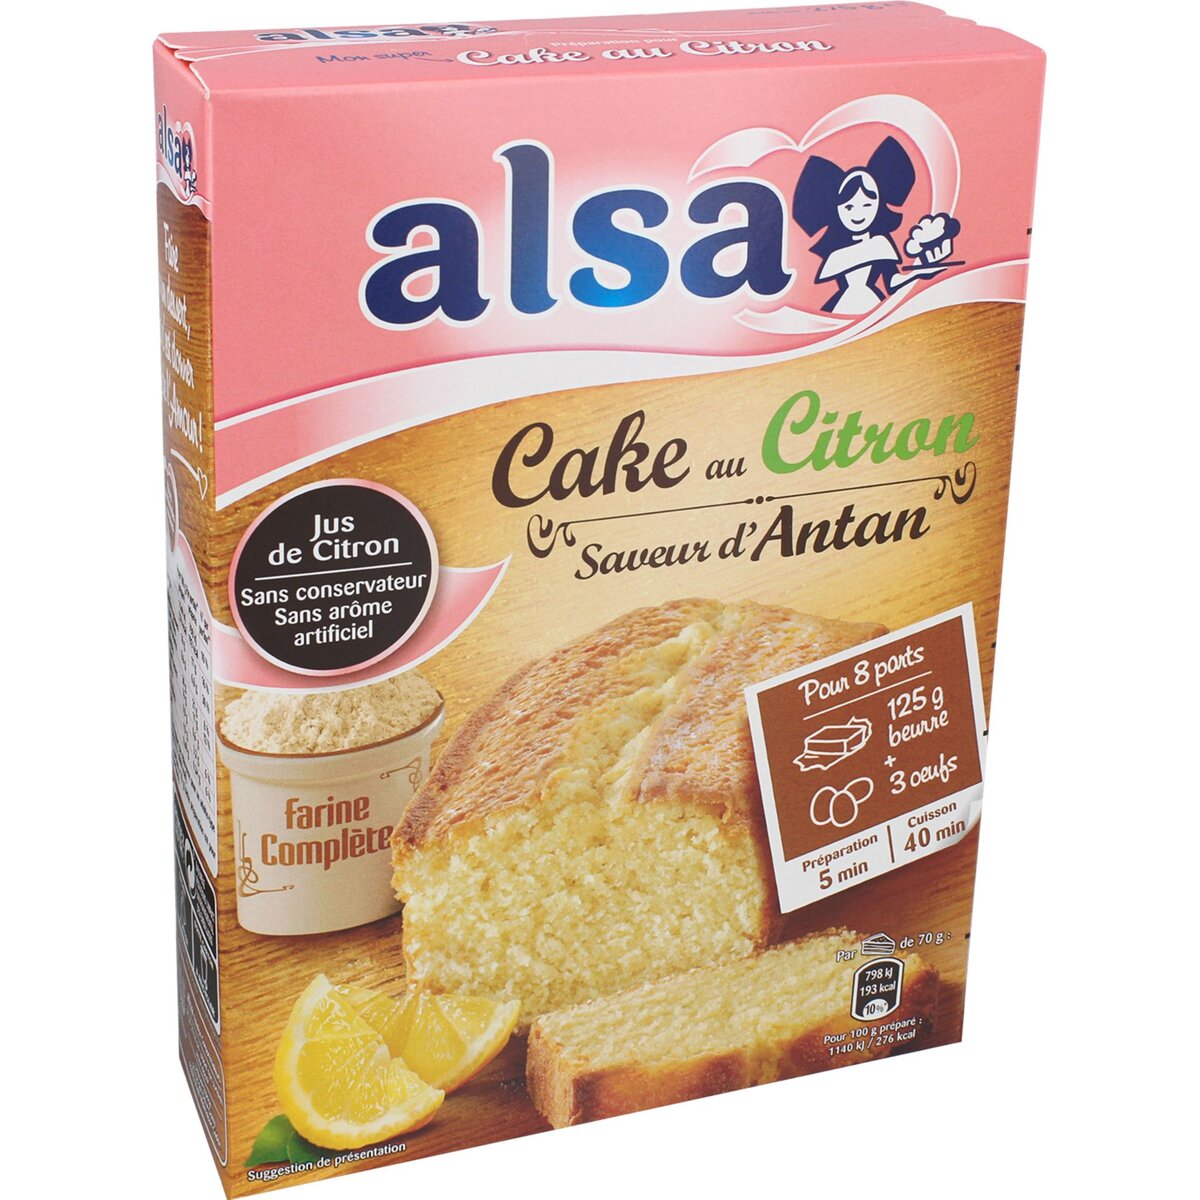 ALSA Alsa cake au citron saveur d'antan 275g